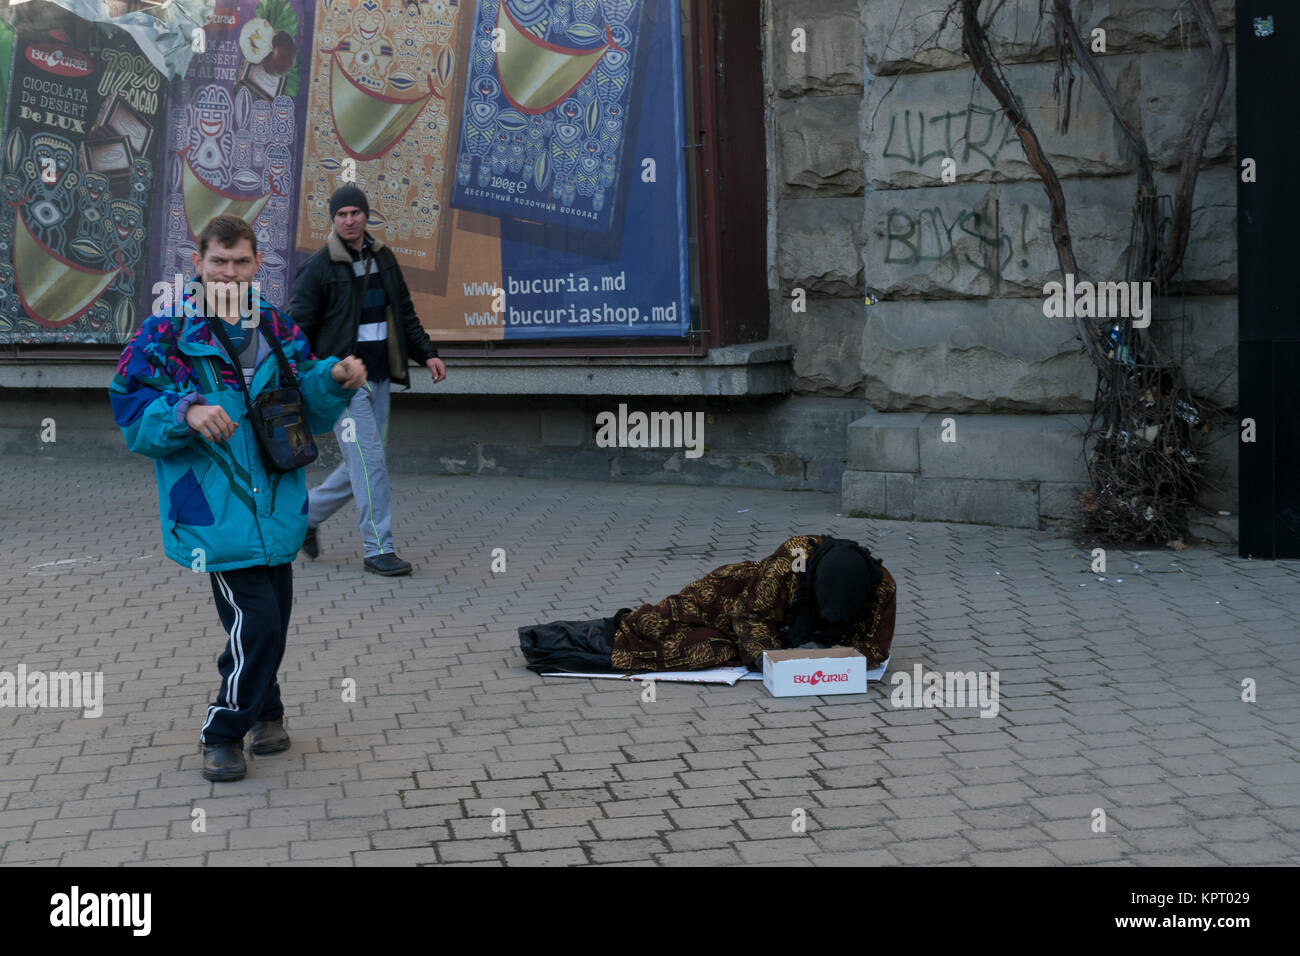 CHISINAU, MOLDOVA – DECEMBER 21, 2015: Unidentified people begging for money in the center of Chisinau, capital of Republic of Moldova. Stock Photo